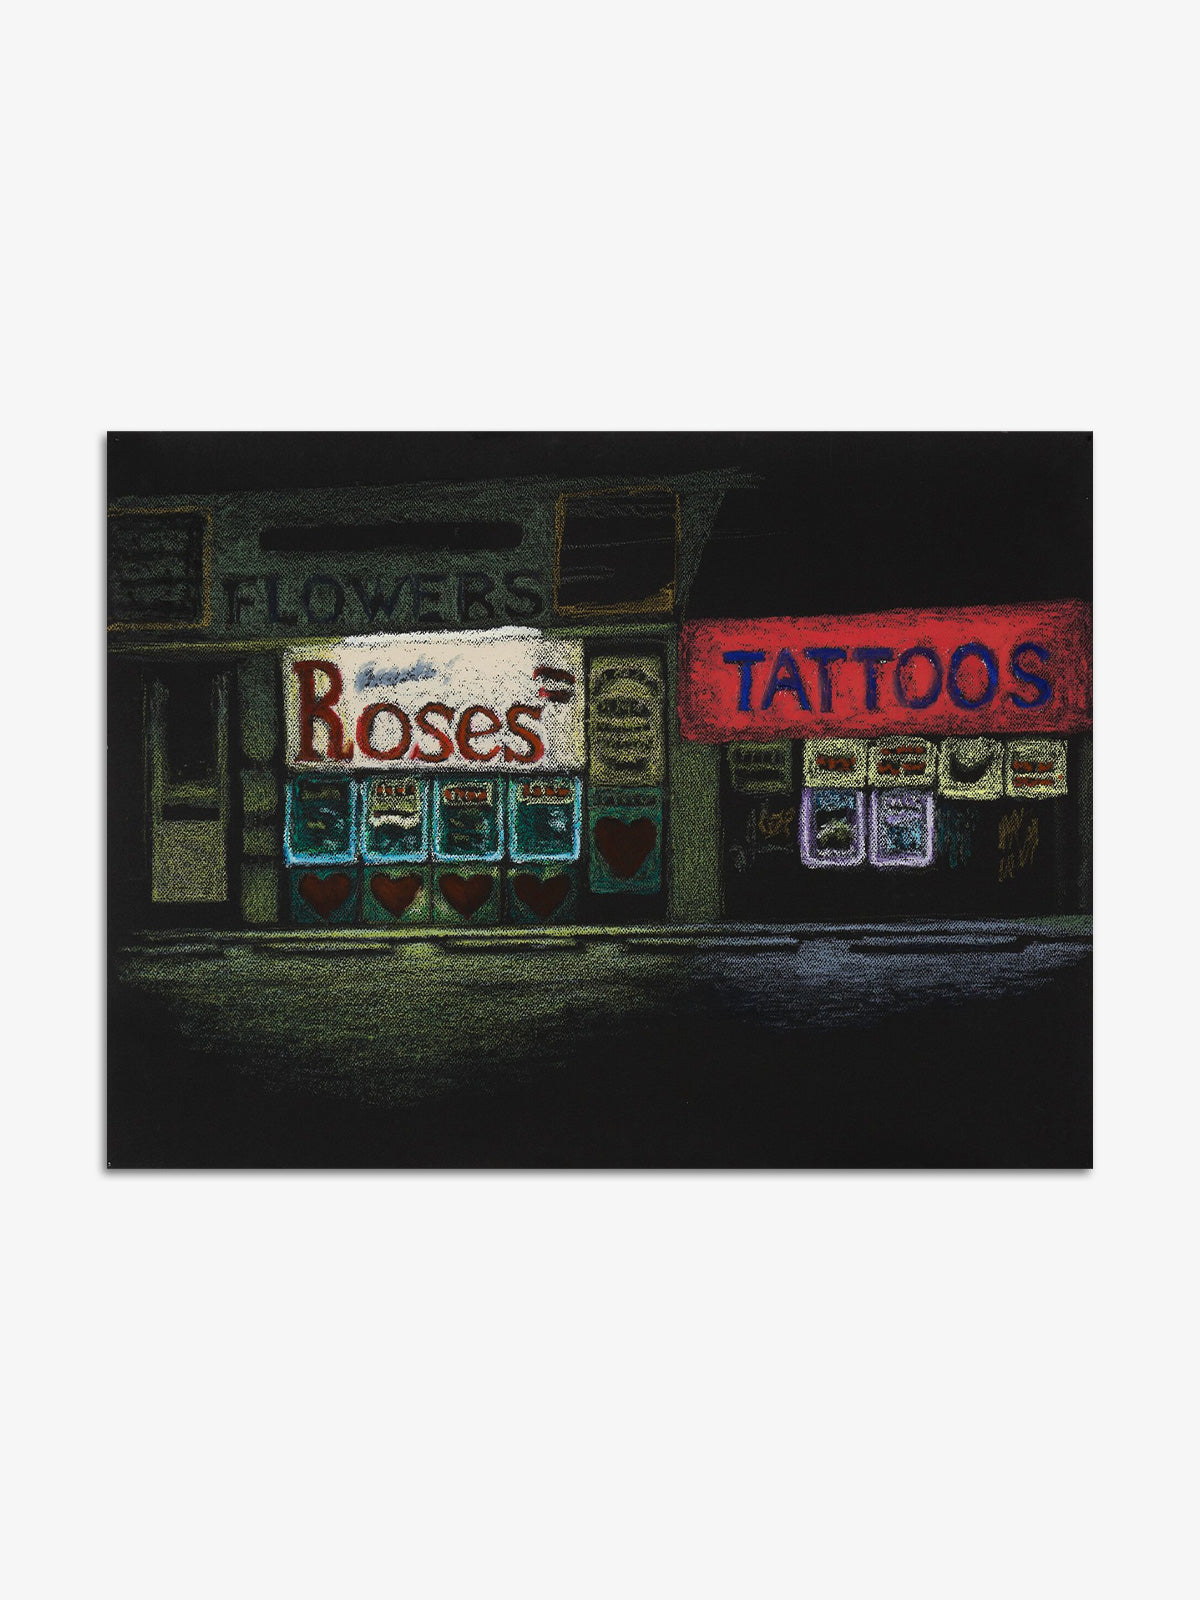 Jane Dickson "Roses and Tattoos" Print